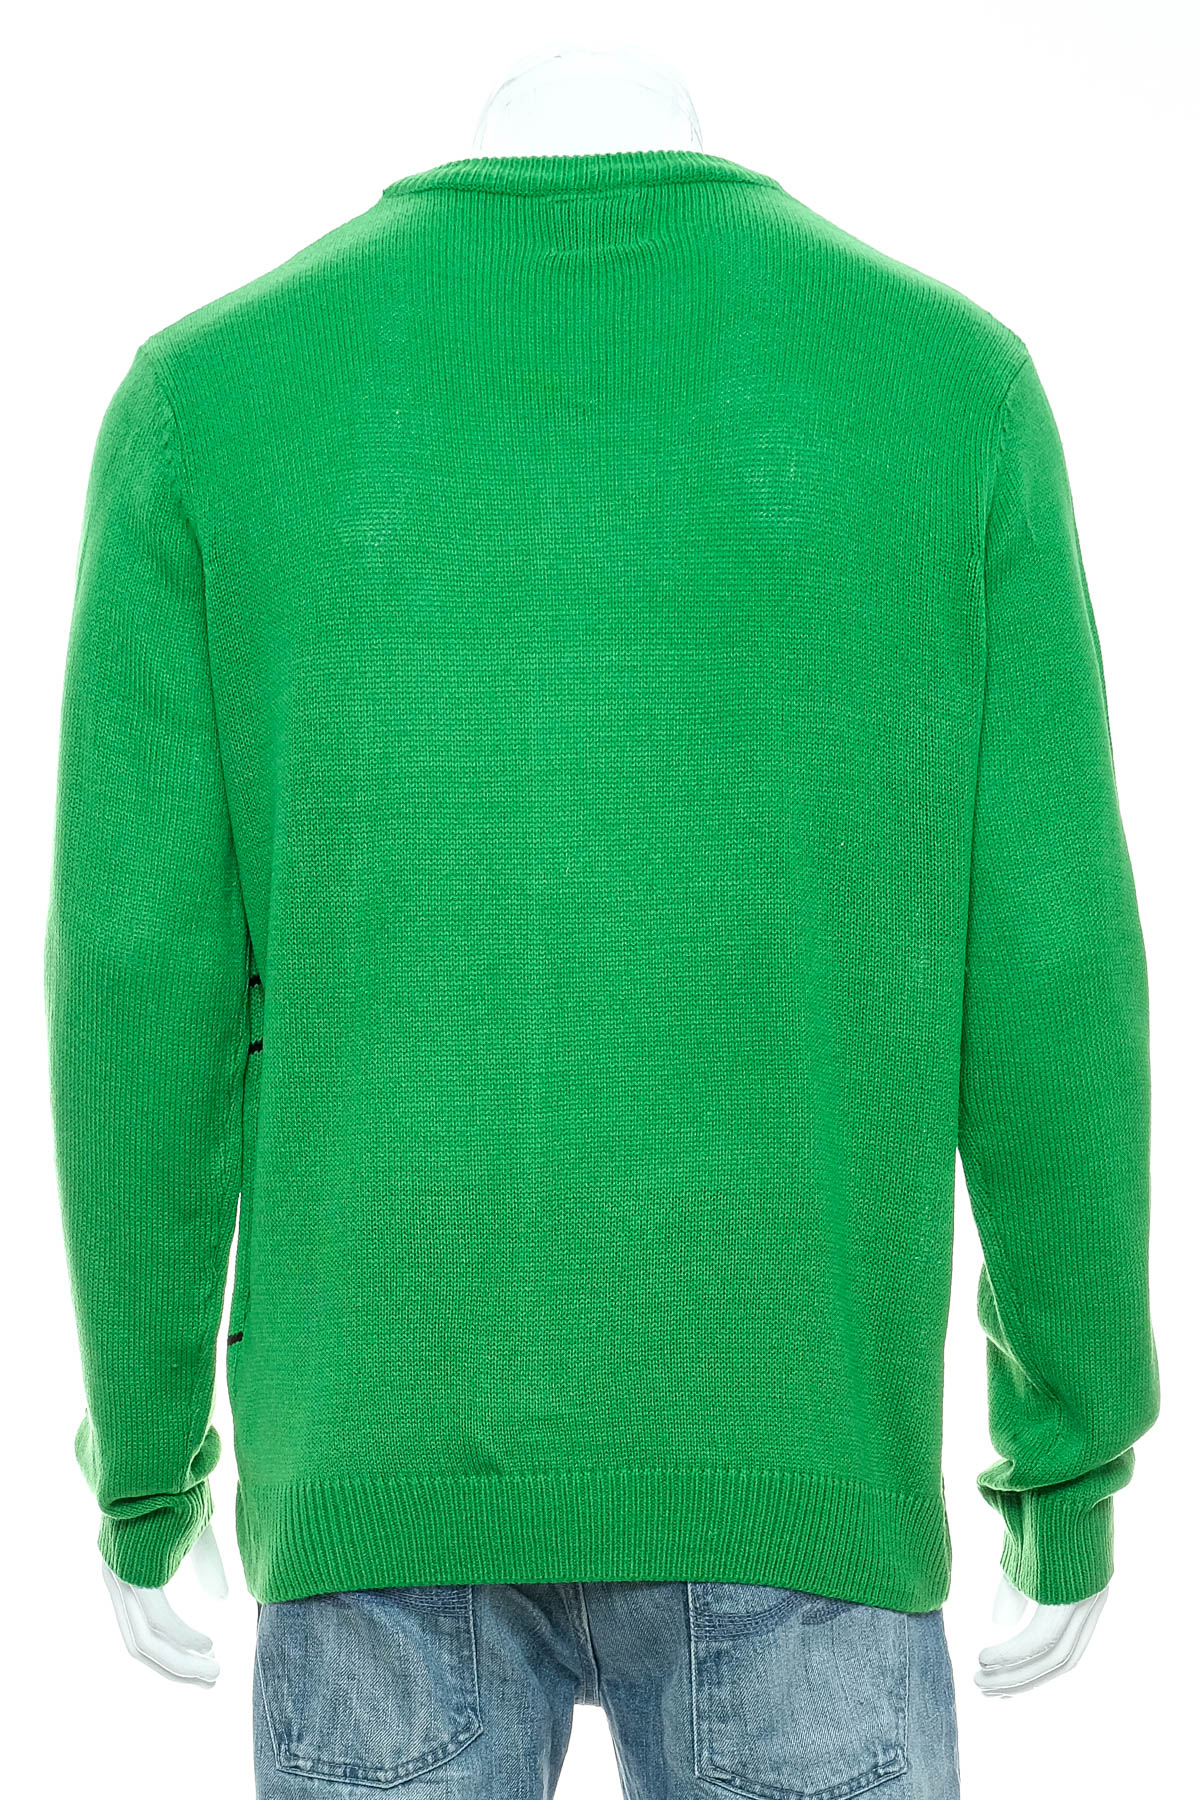 Men's sweater - Original Supply & Co. - 1